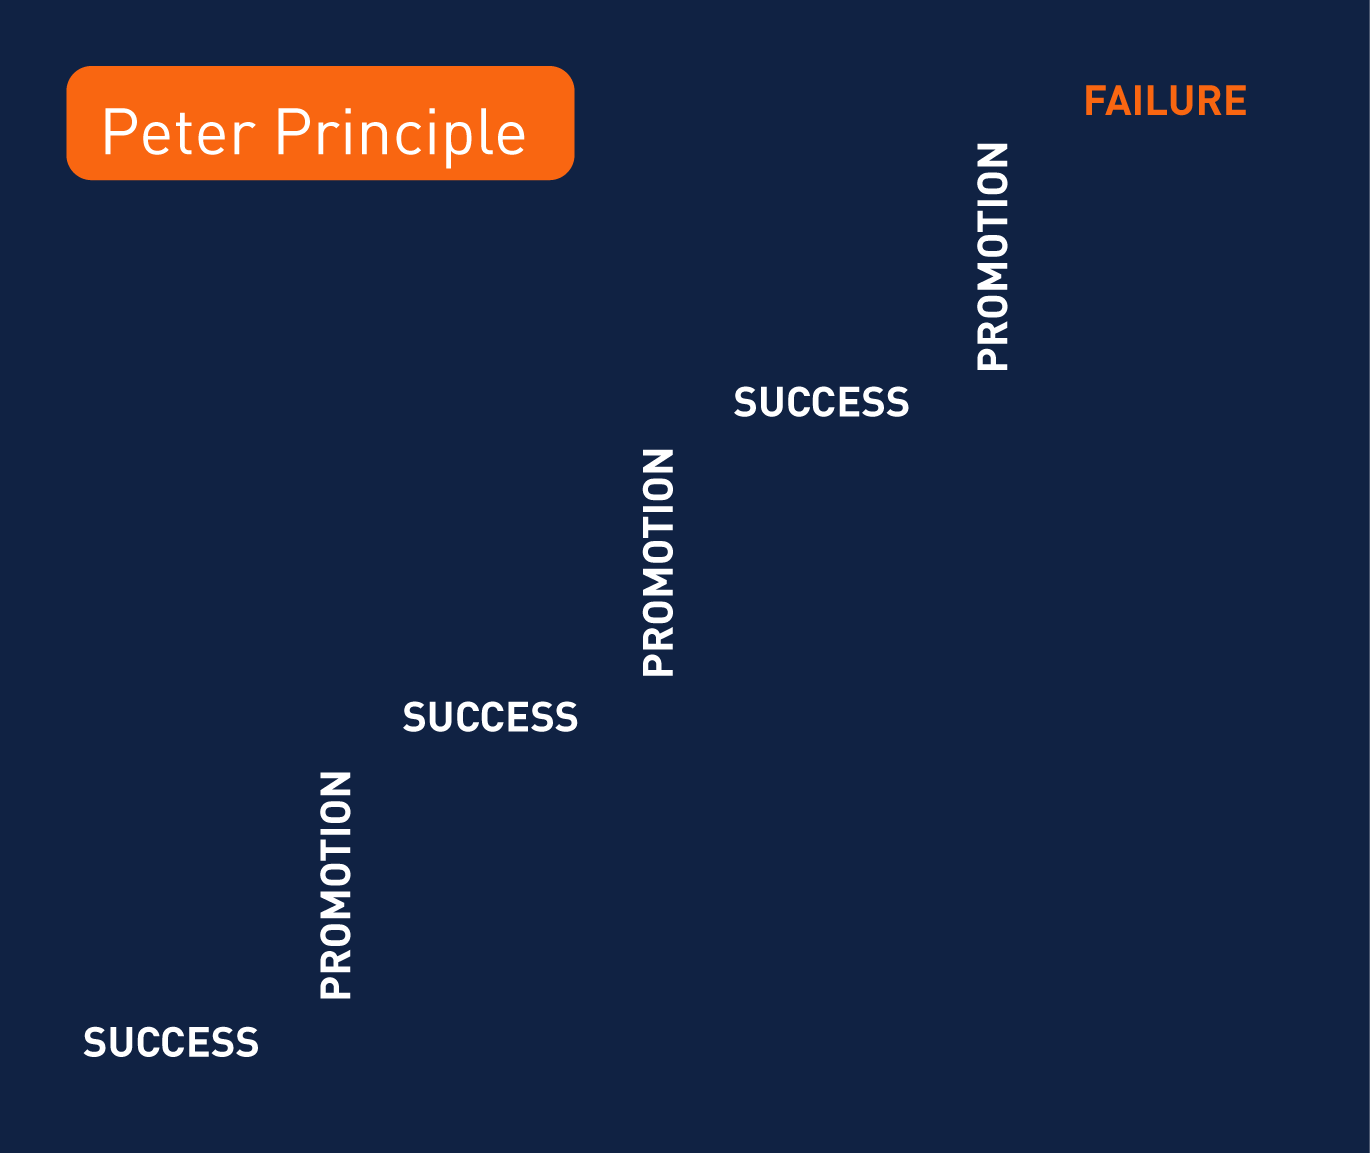 Peter-principle-2.png